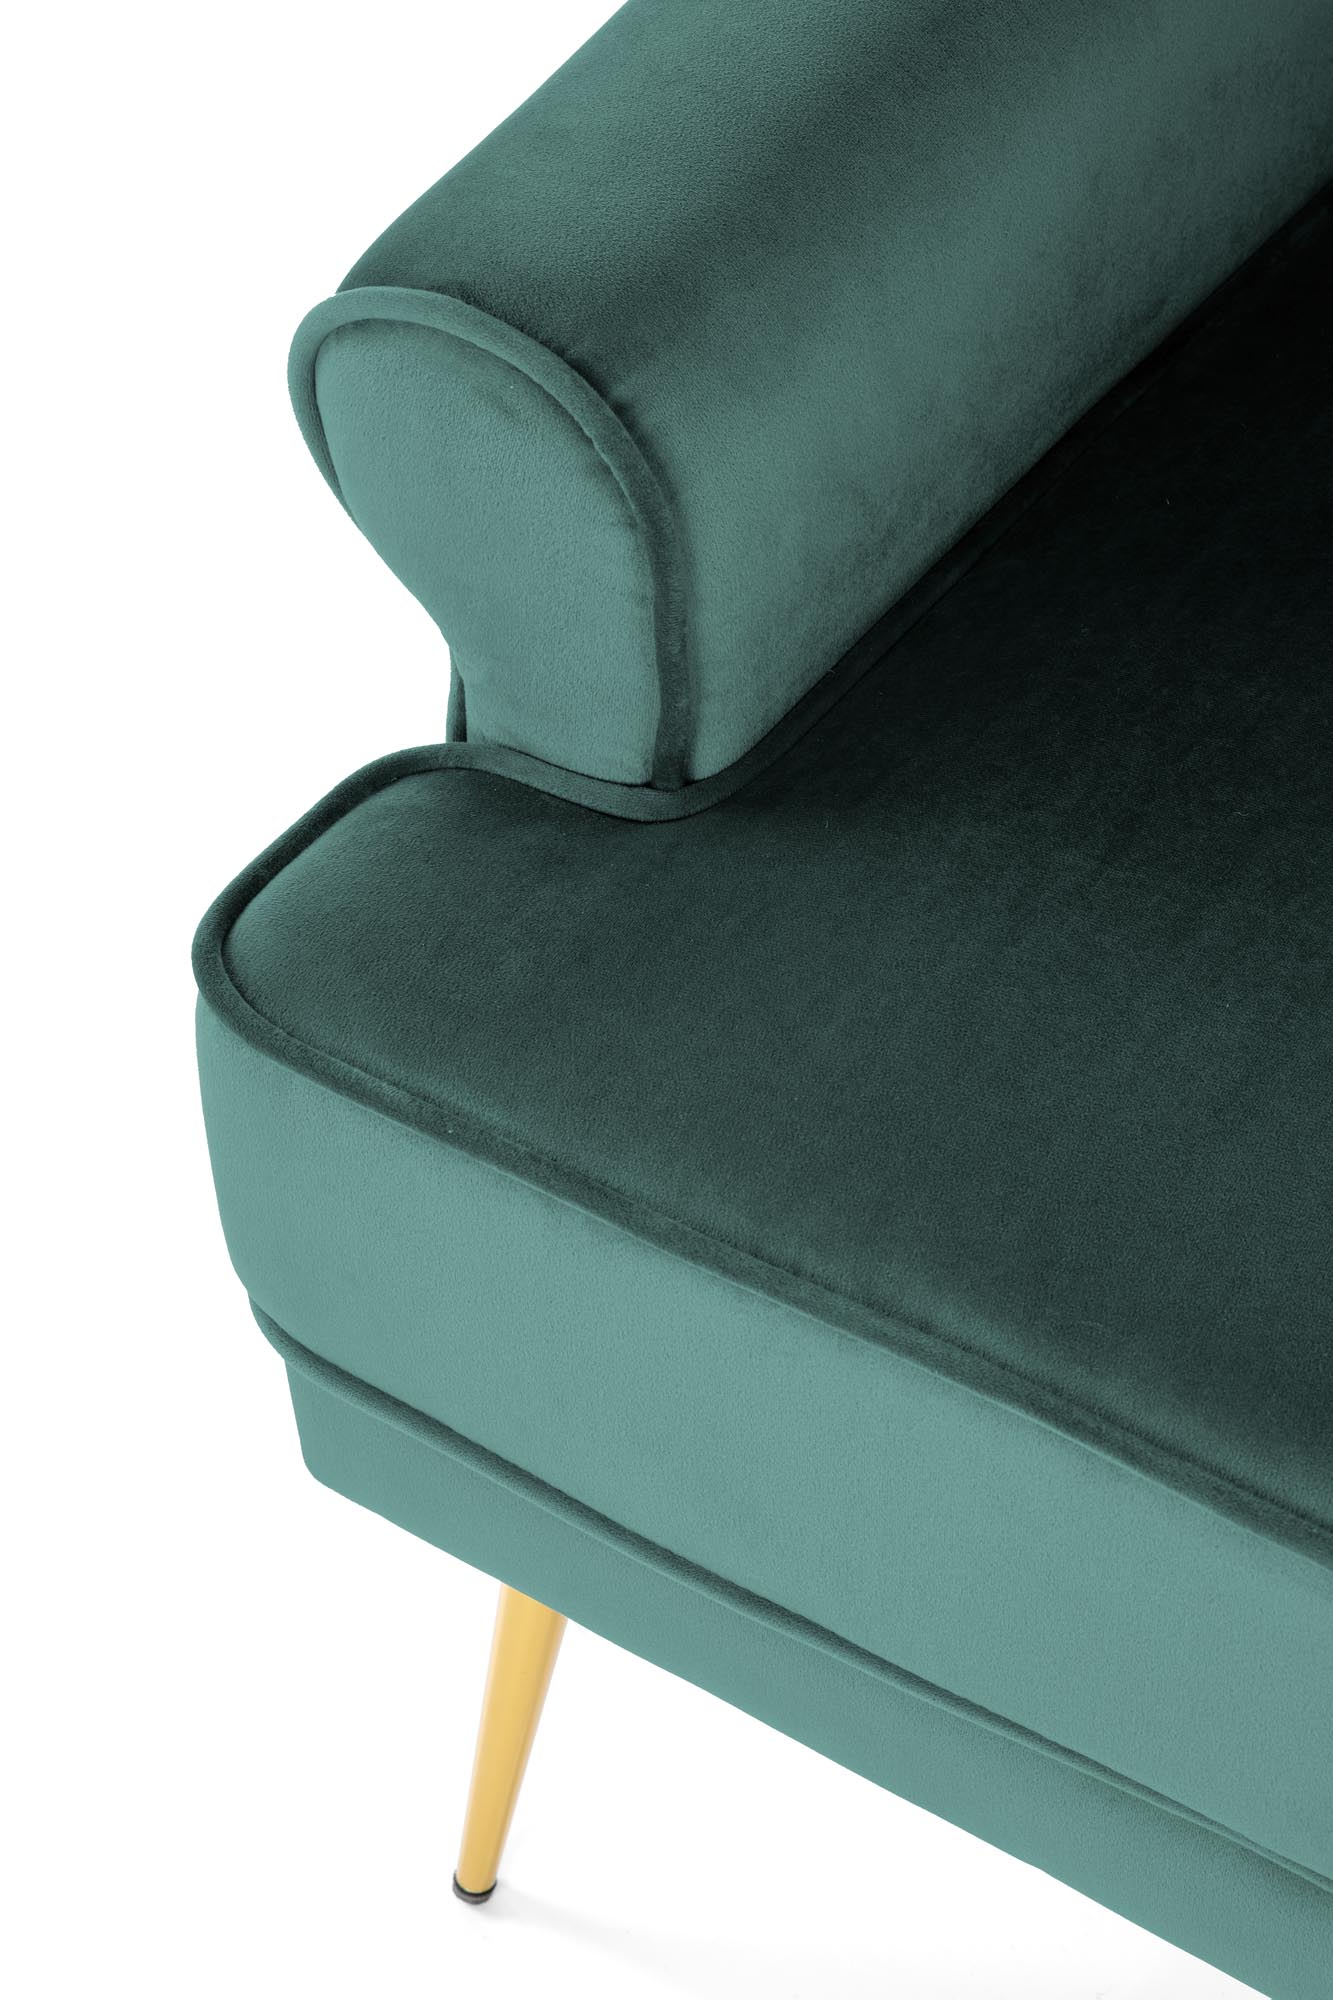 SANTI fotel - sötétzöld / sárga santi Křeslo tmavý Zelený / Žlutý